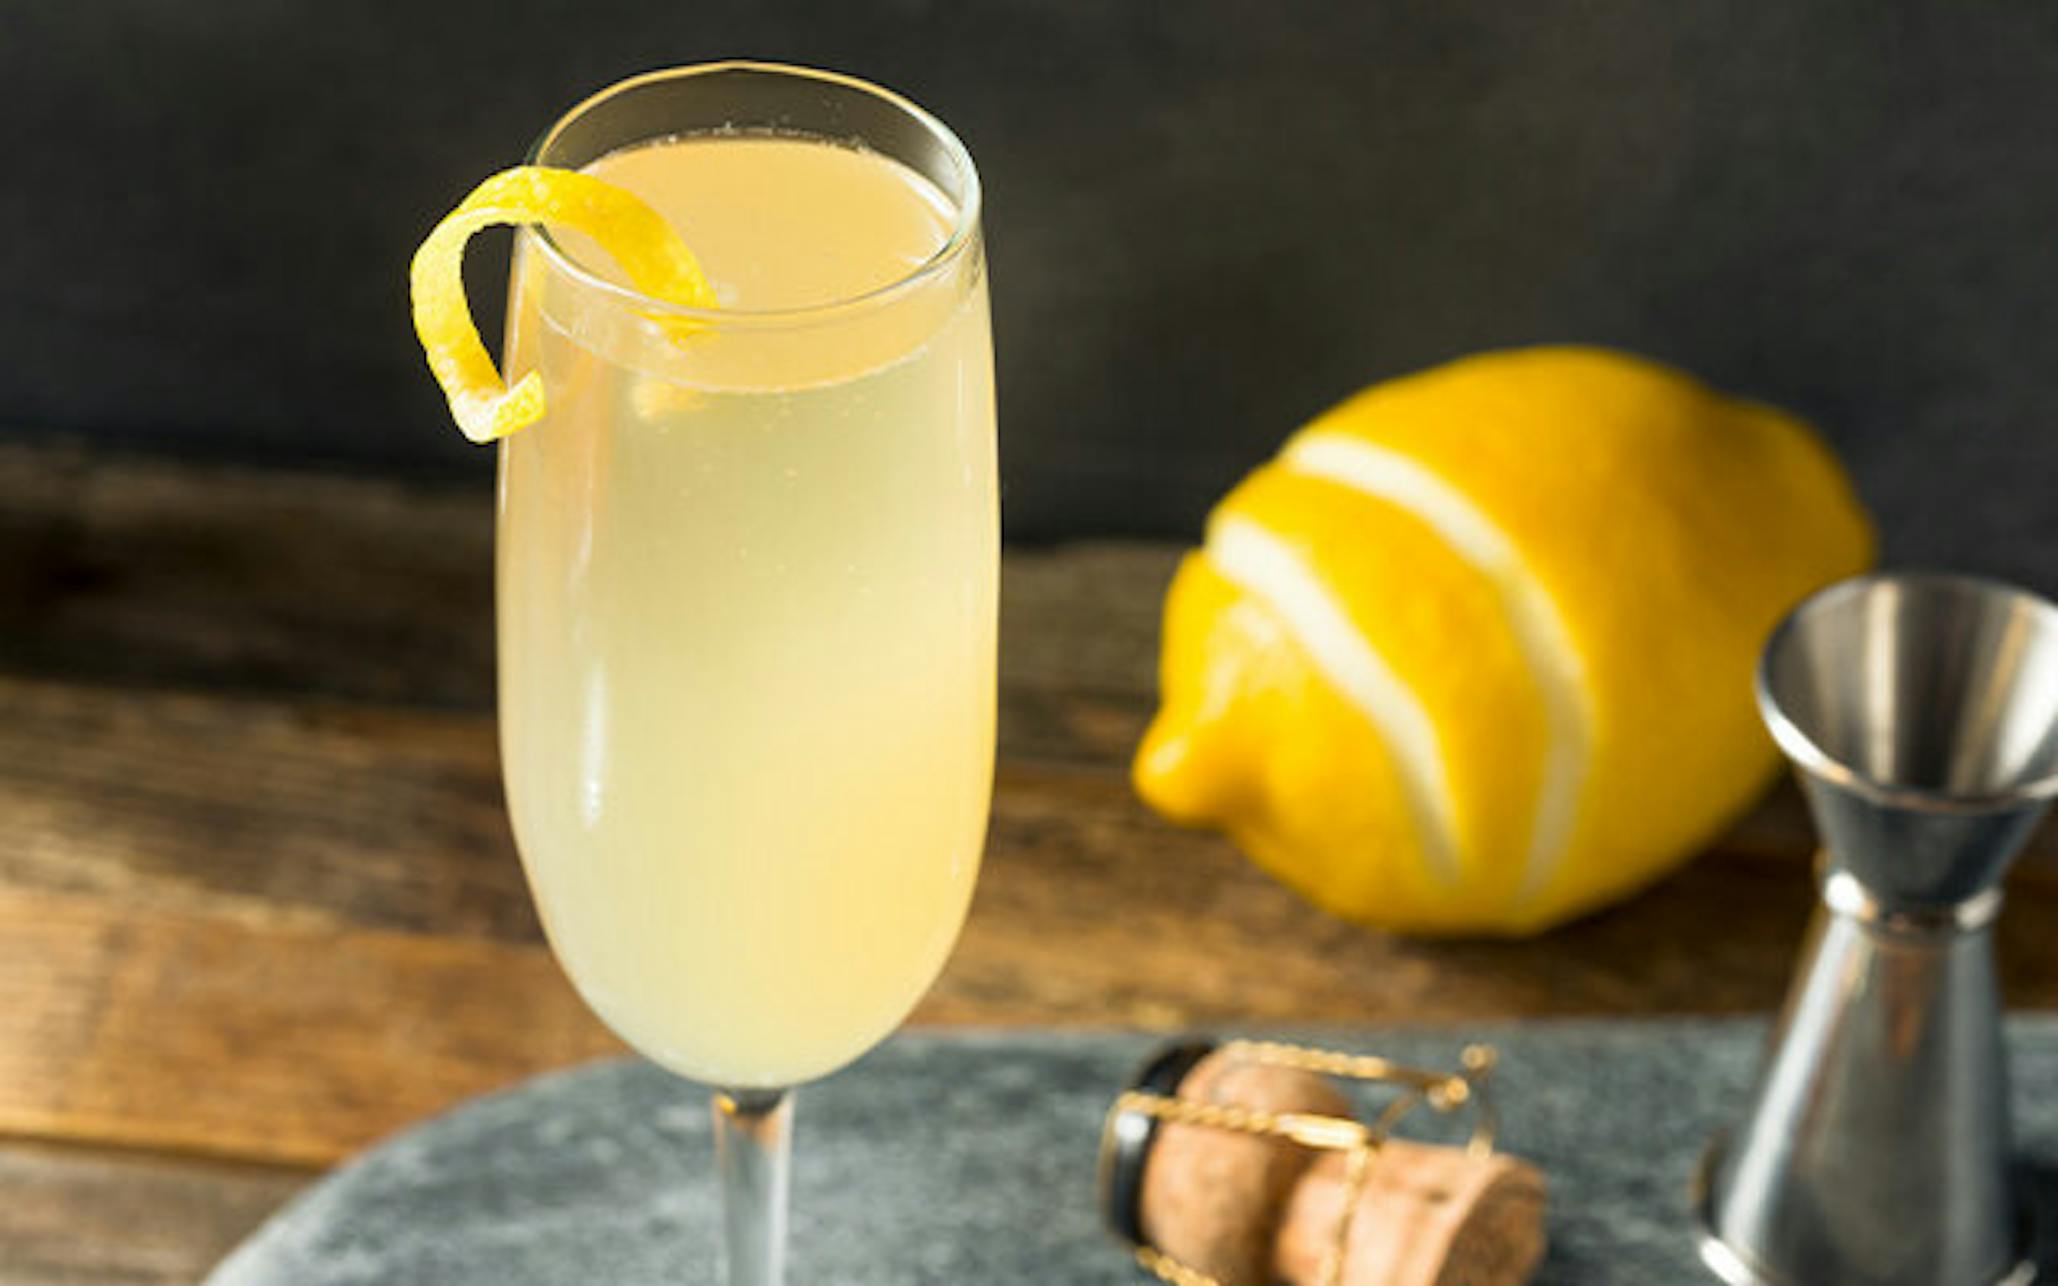 Vanilla French 75 cocktail with lemon peel twist garnish